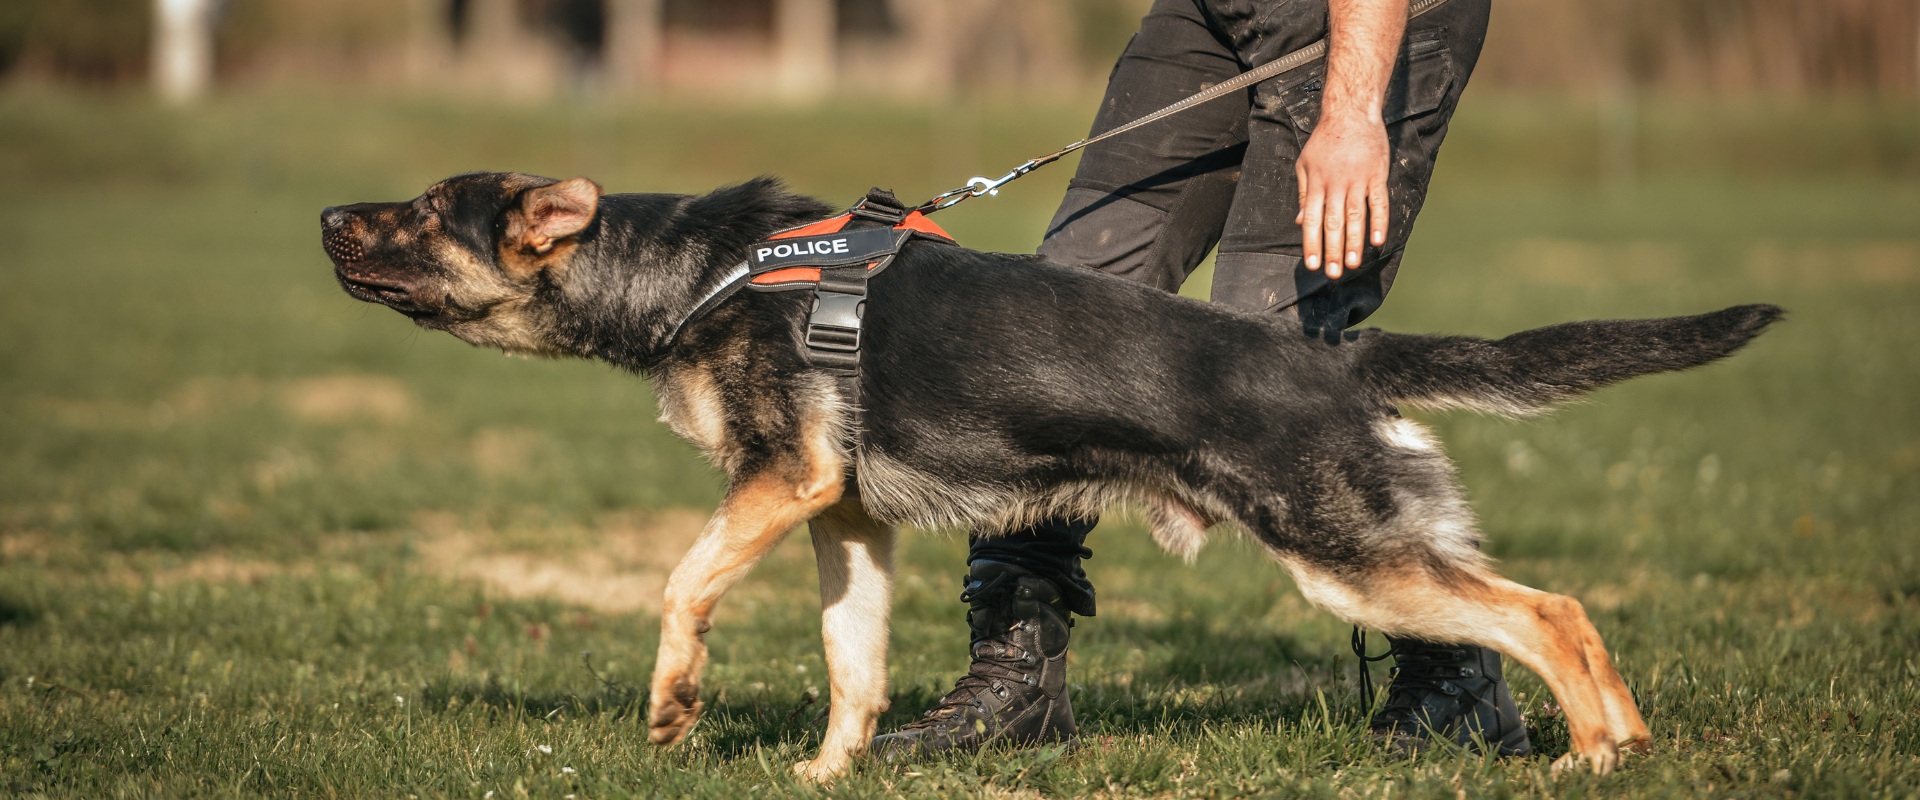 How to train my german shepherd like a police dog